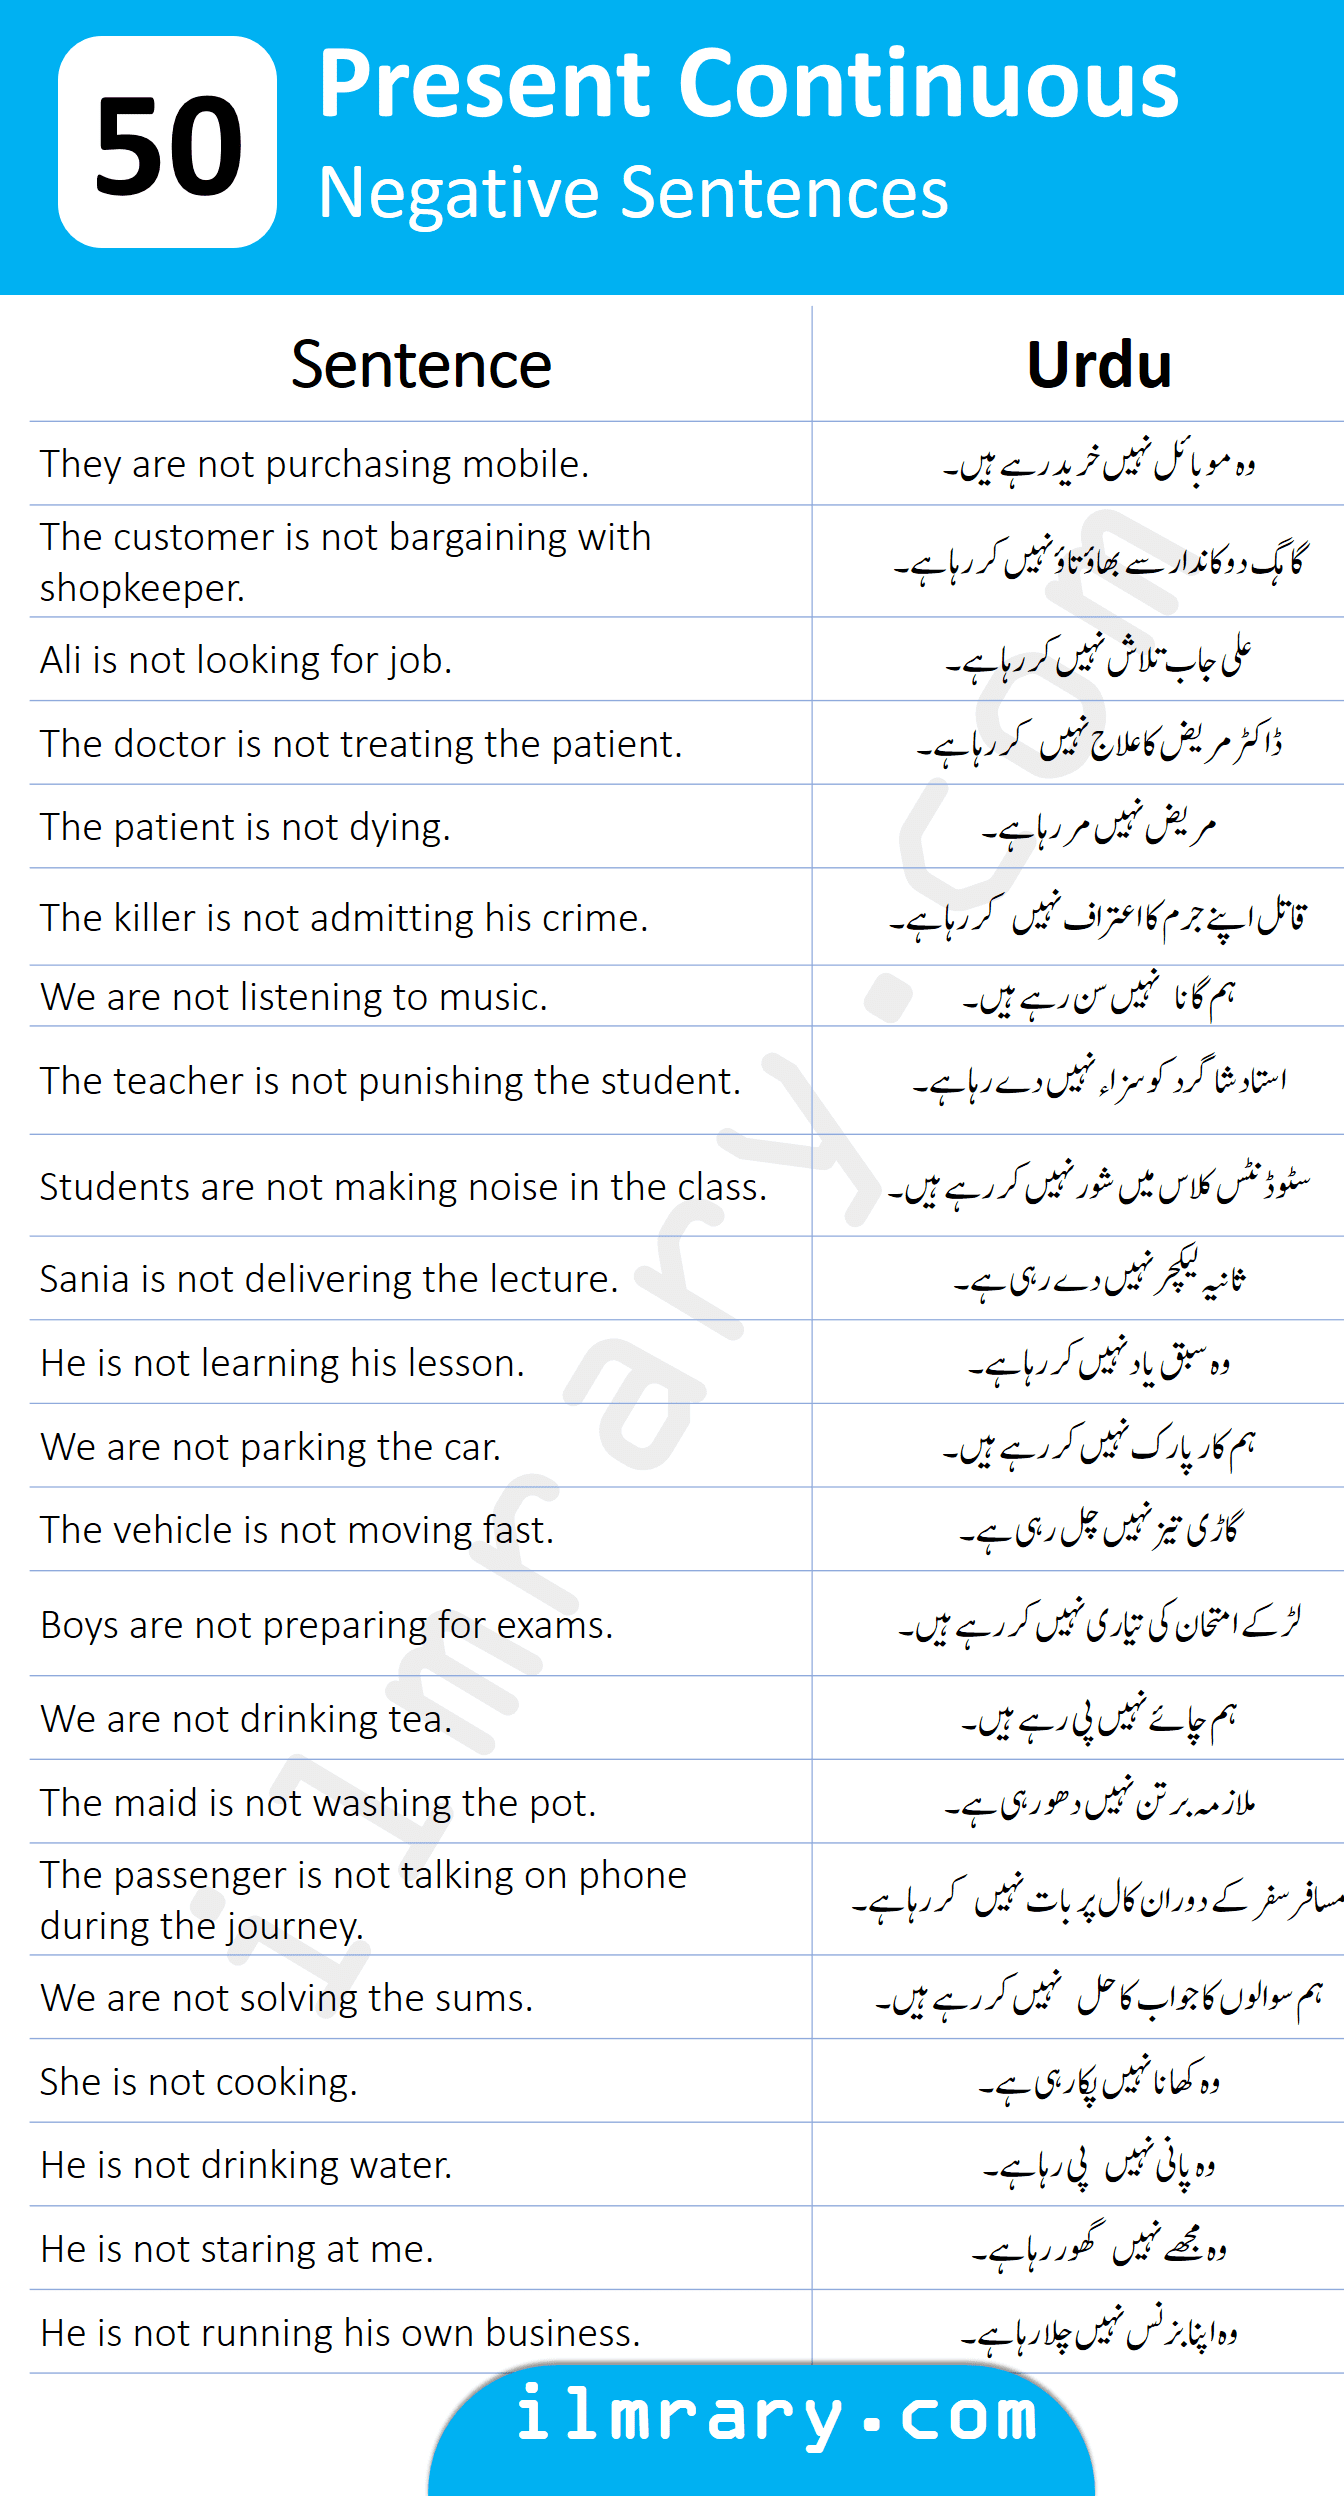 Negative Sentences for present continuous Tense with Urdu Translation